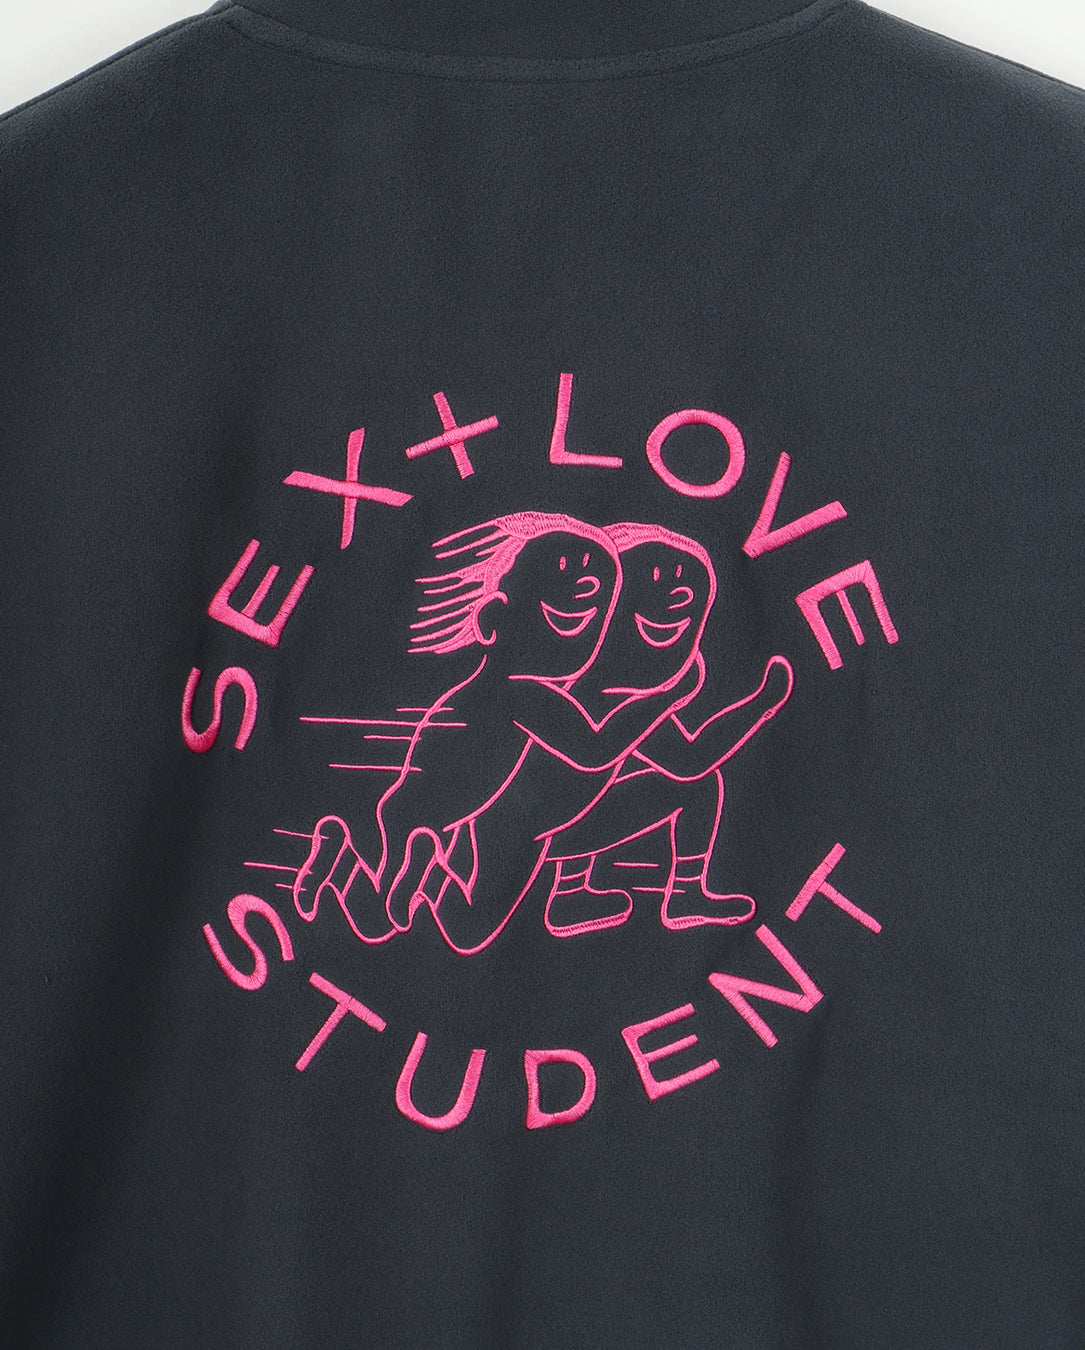 Sex ＋ Student navy blue